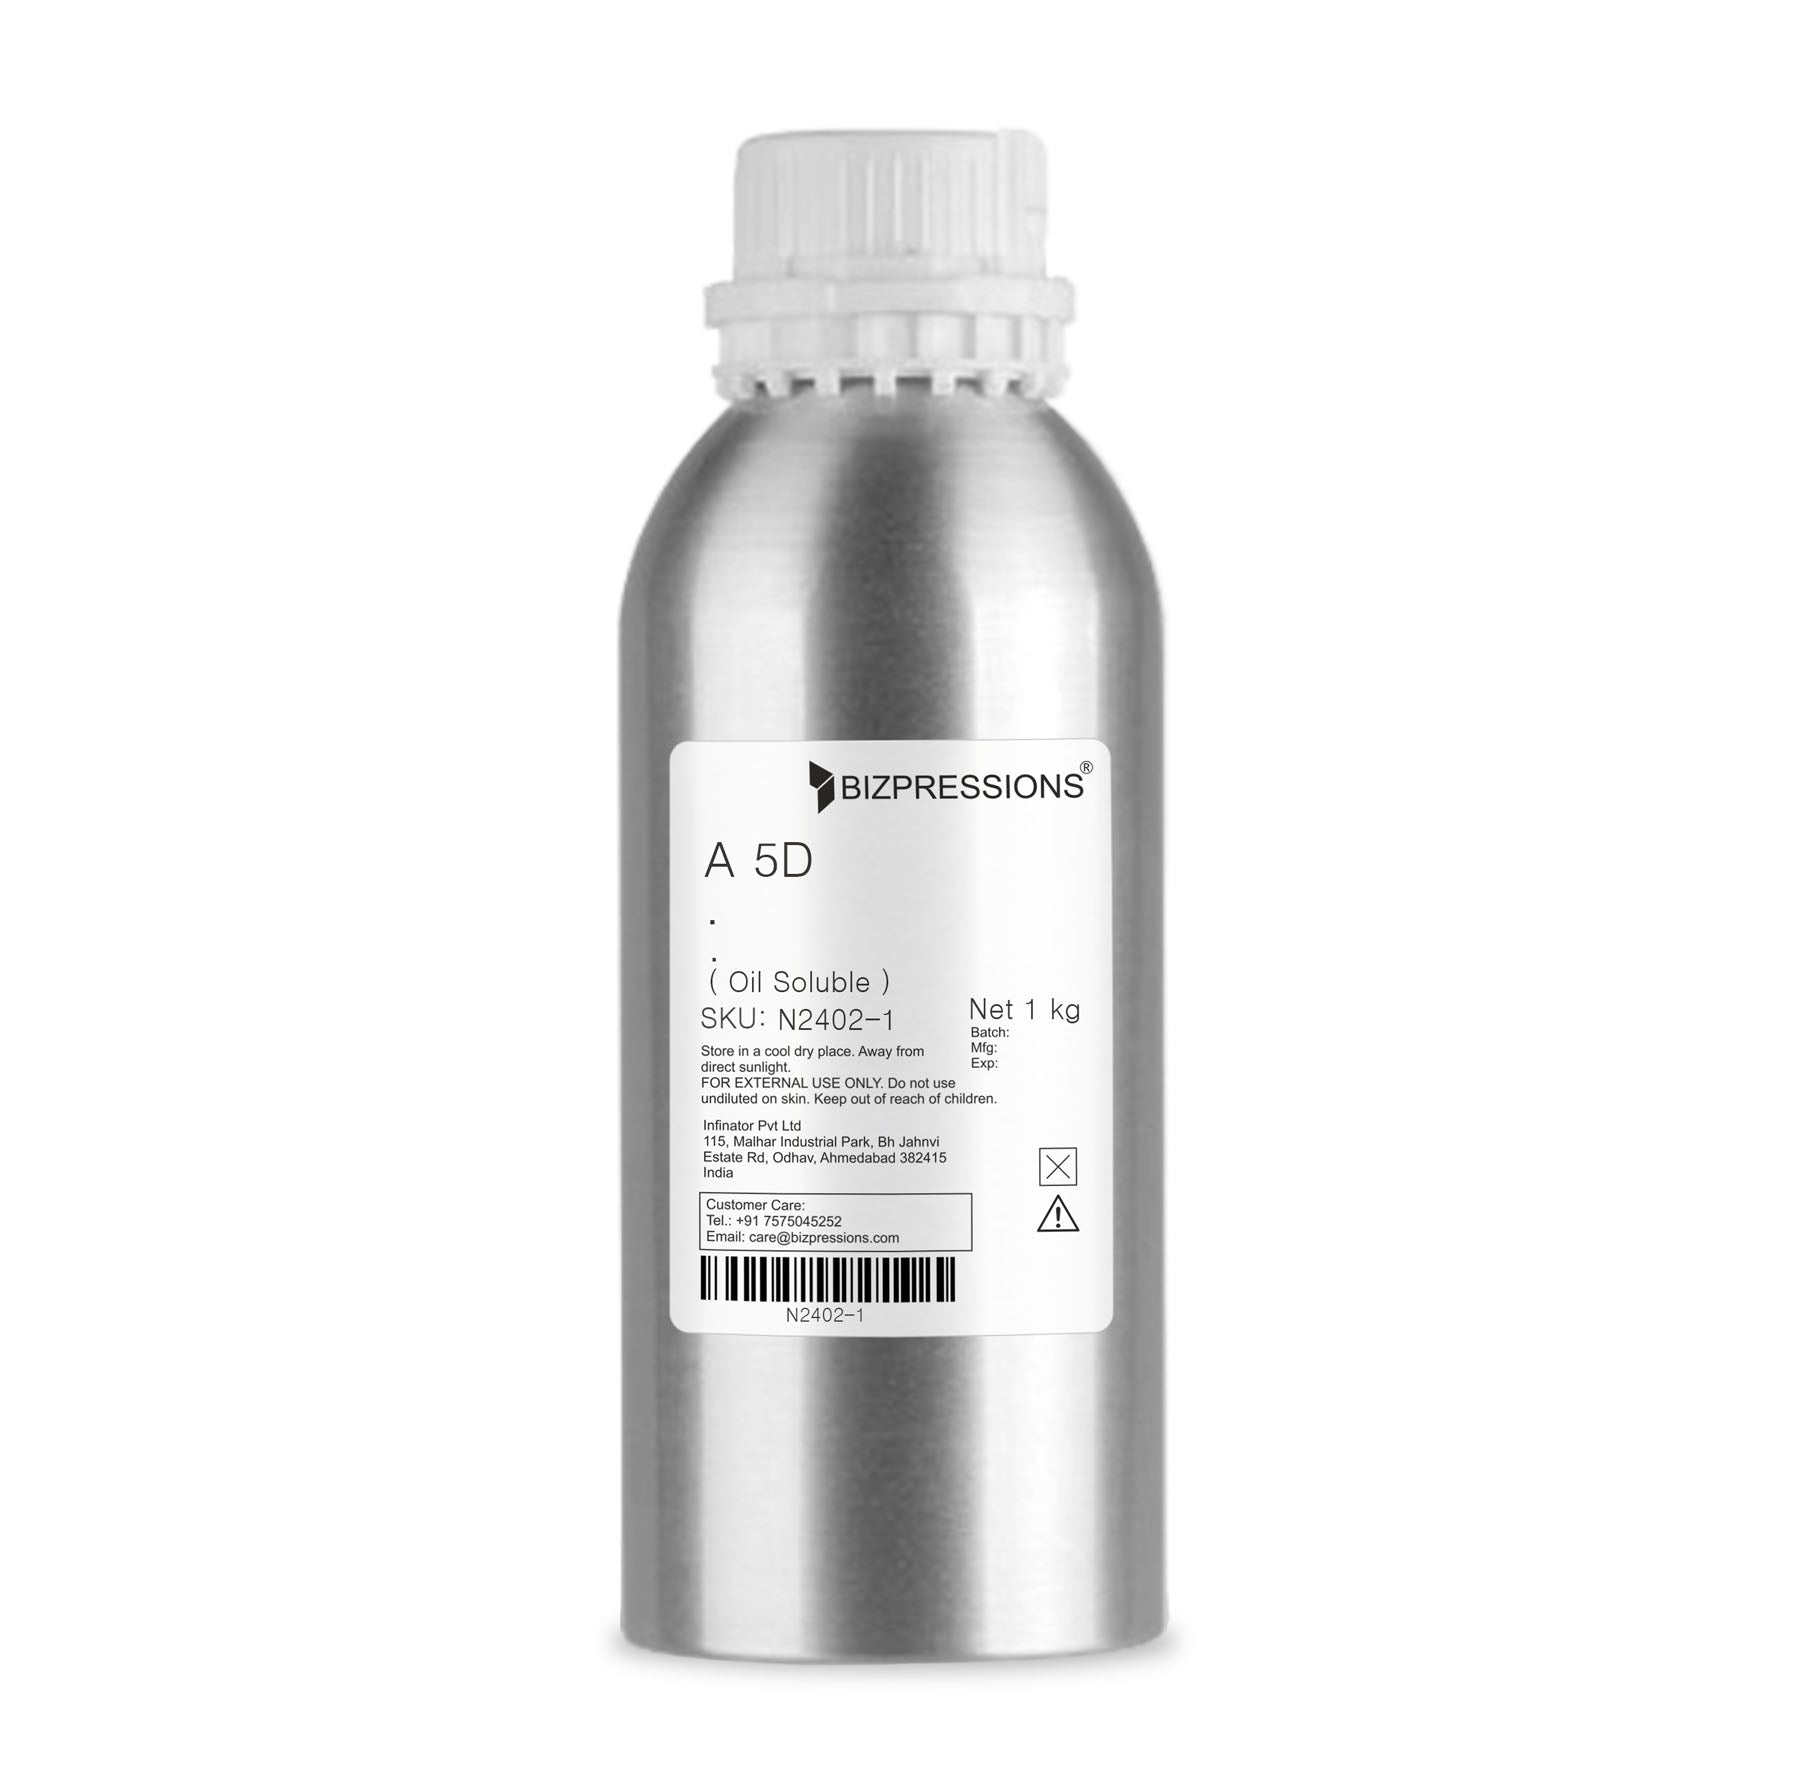 A 5D - Fragrance ( Oil Soluble ) - 1 kg